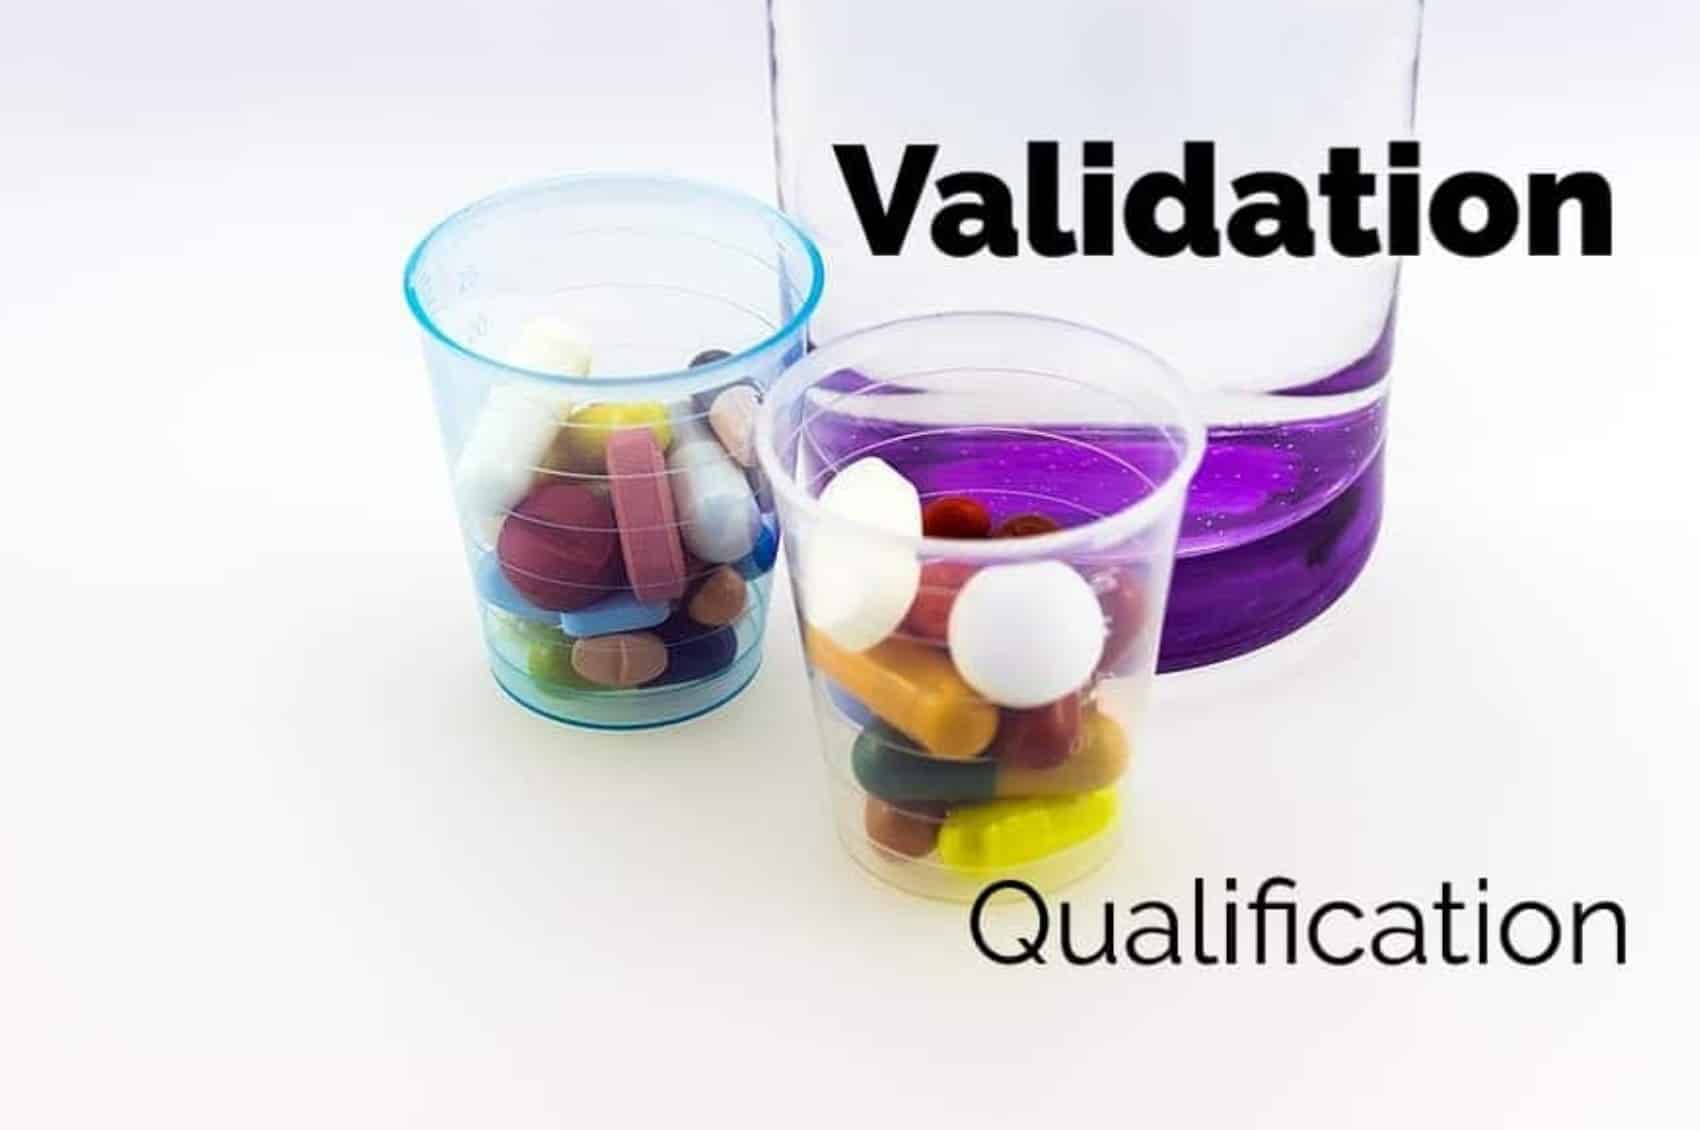 qualification and validation